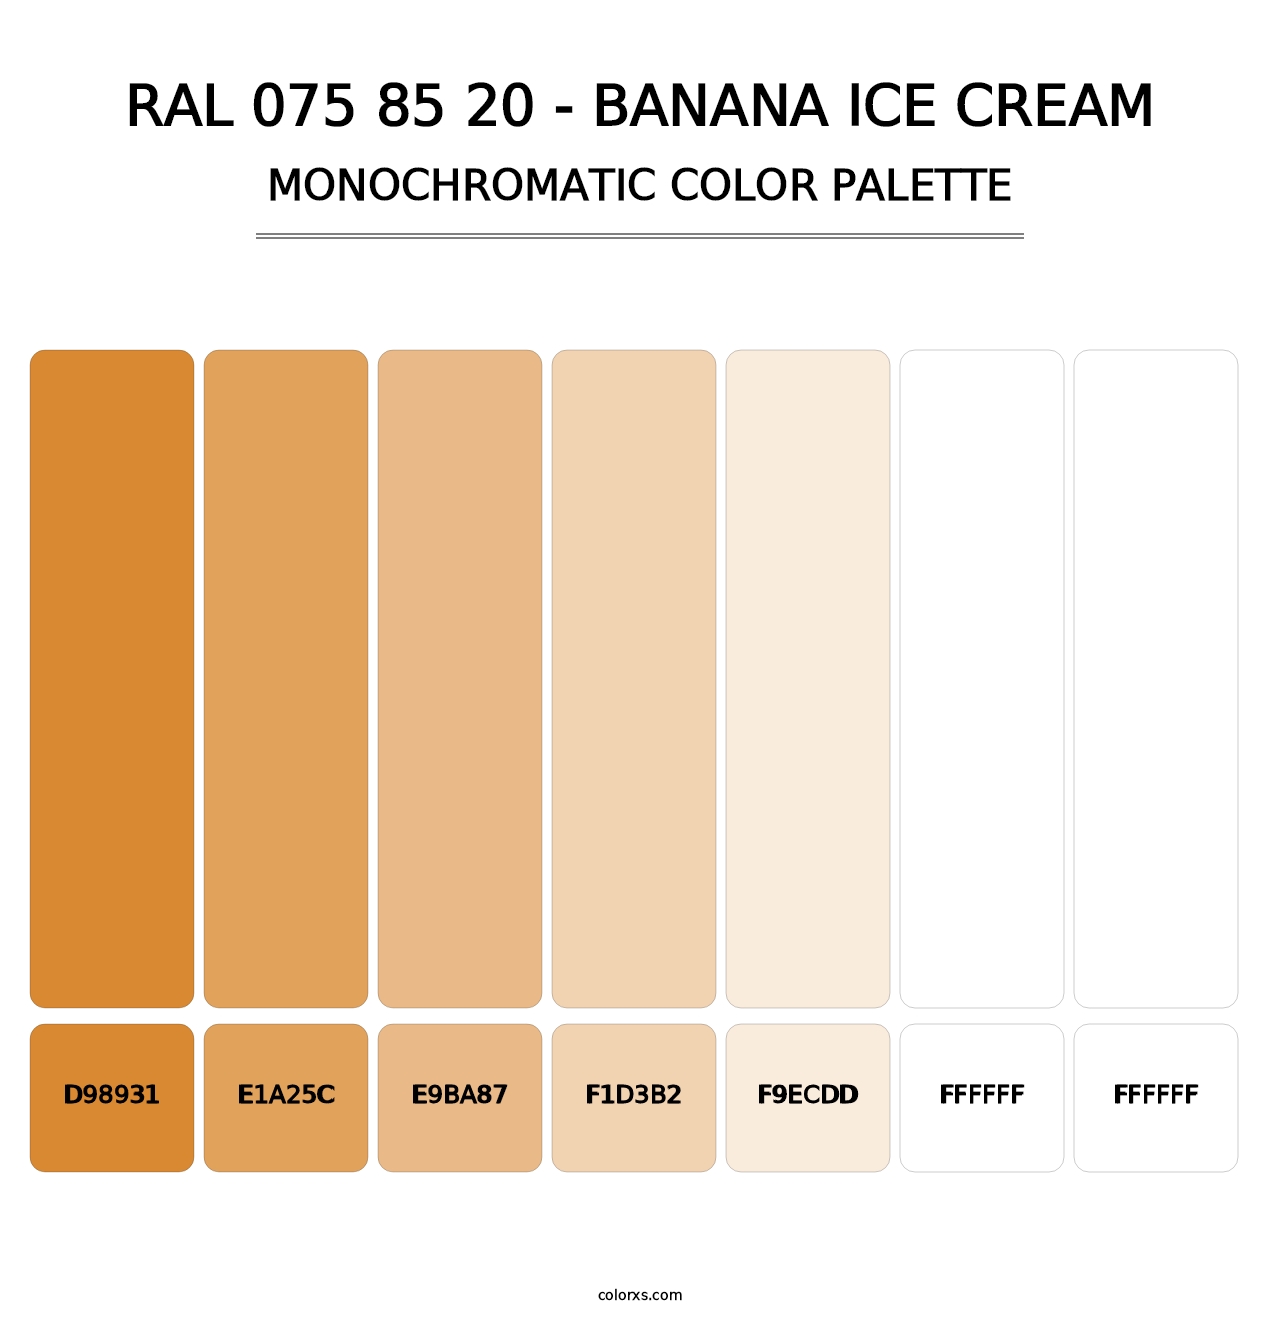 RAL 075 85 20 - Banana Ice Cream - Monochromatic Color Palette